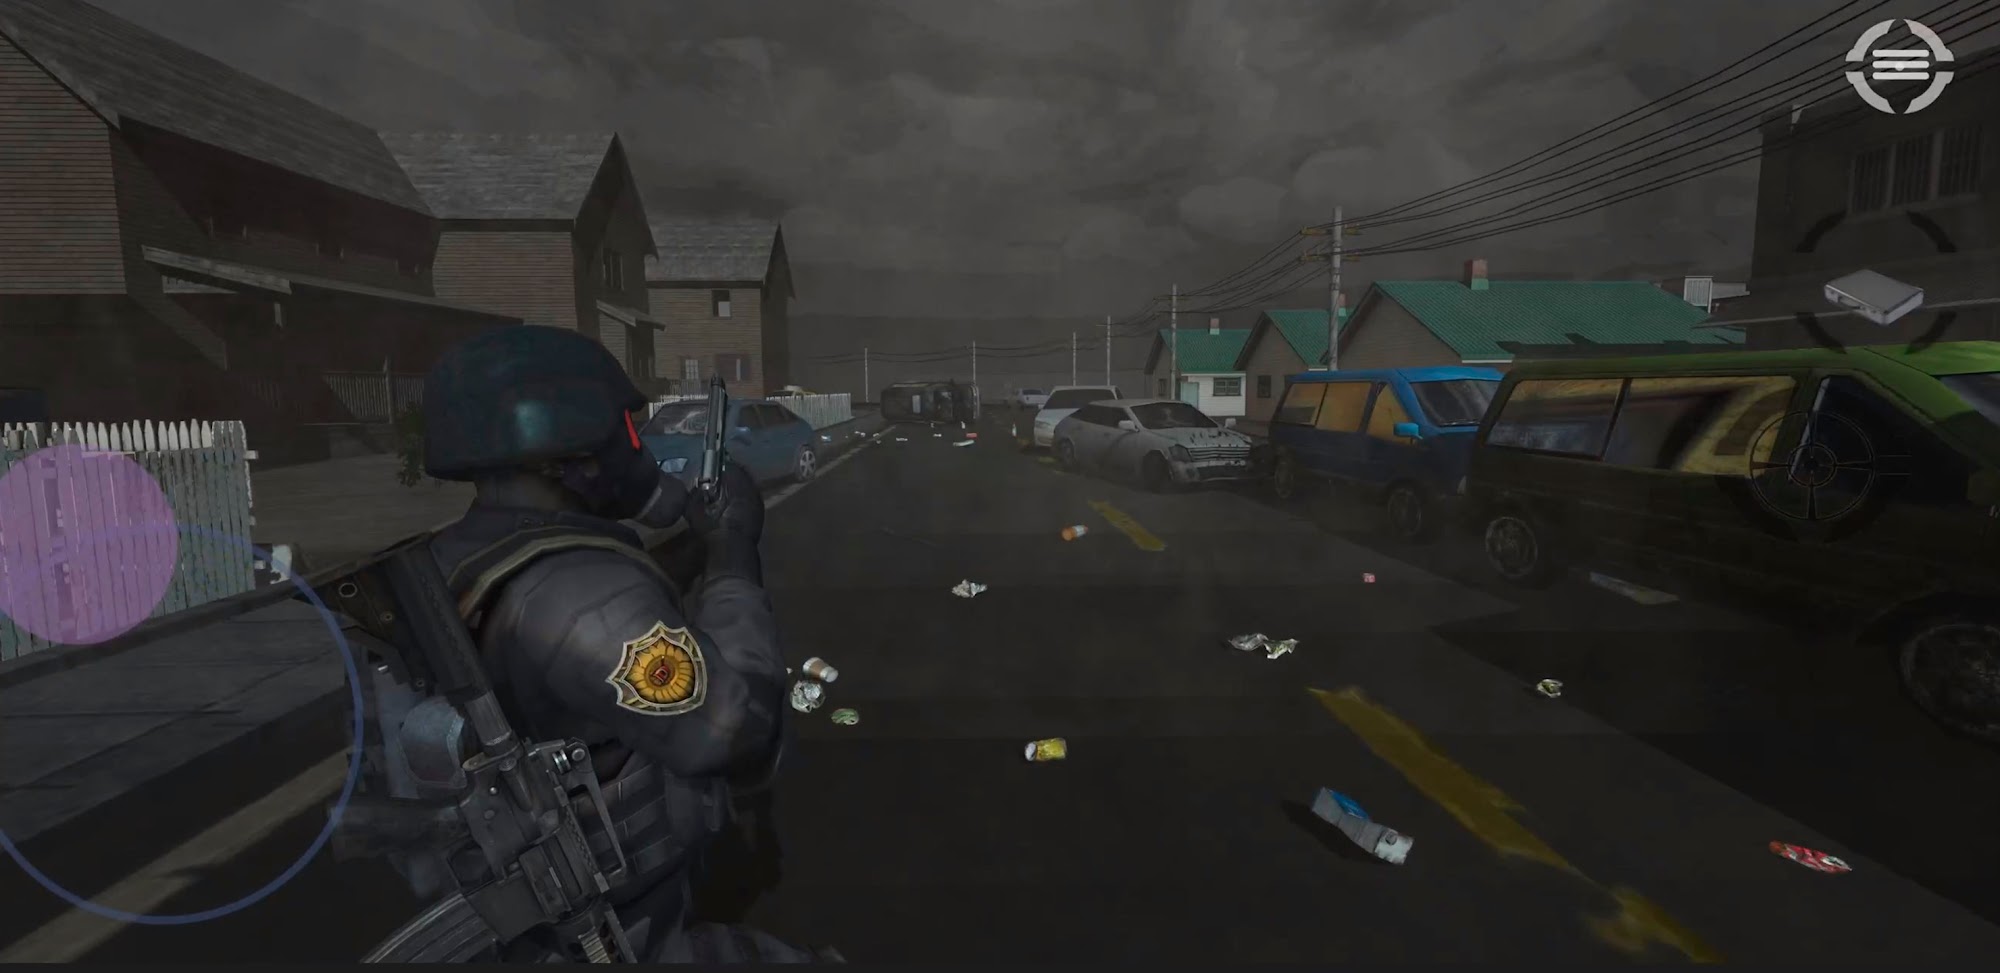 Delta Team: Operation Phoenix - Android game screenshots.